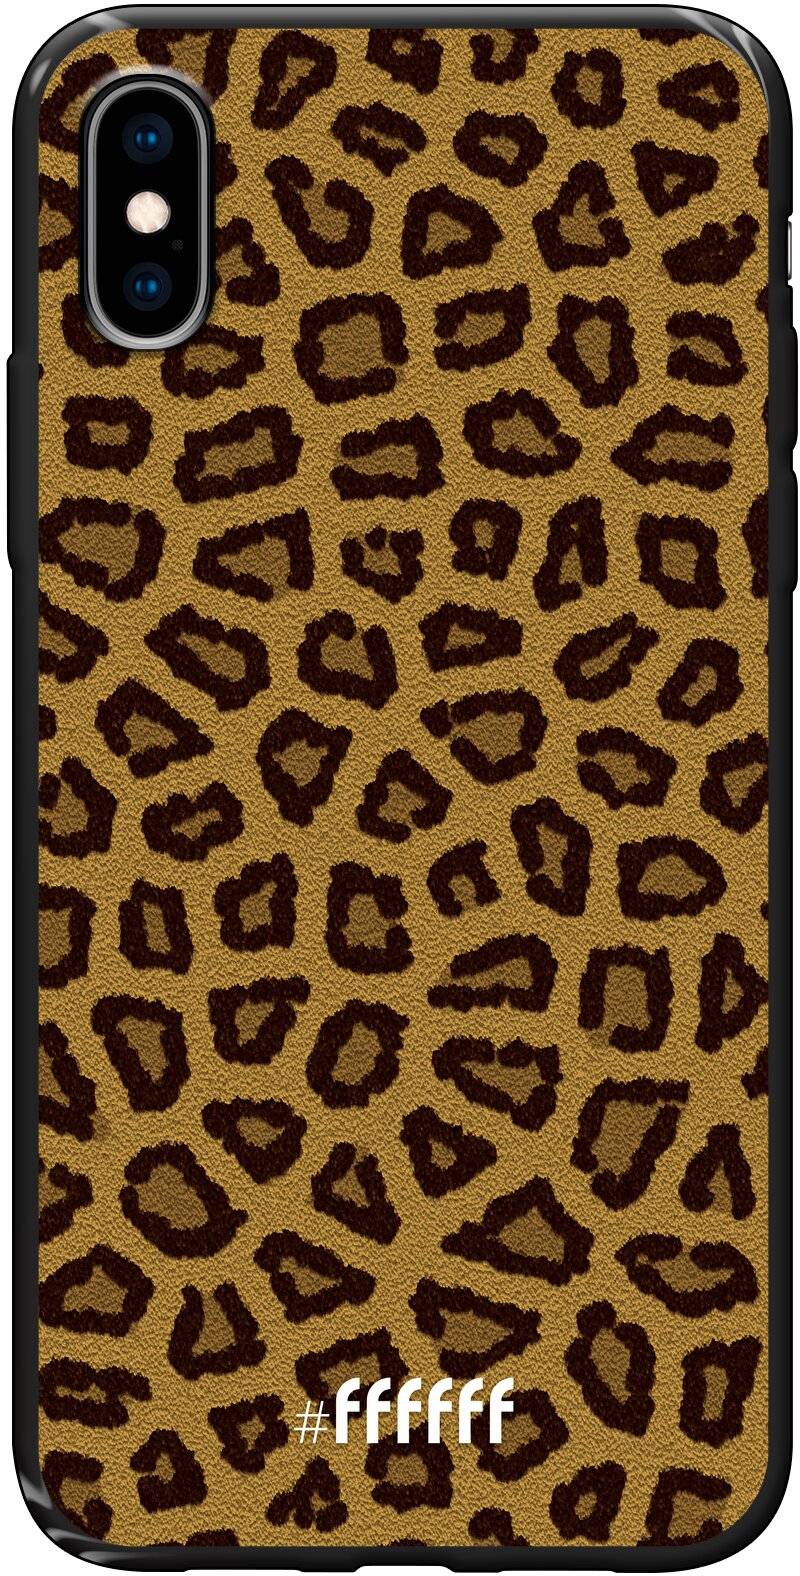 Leopard Print iPhone X